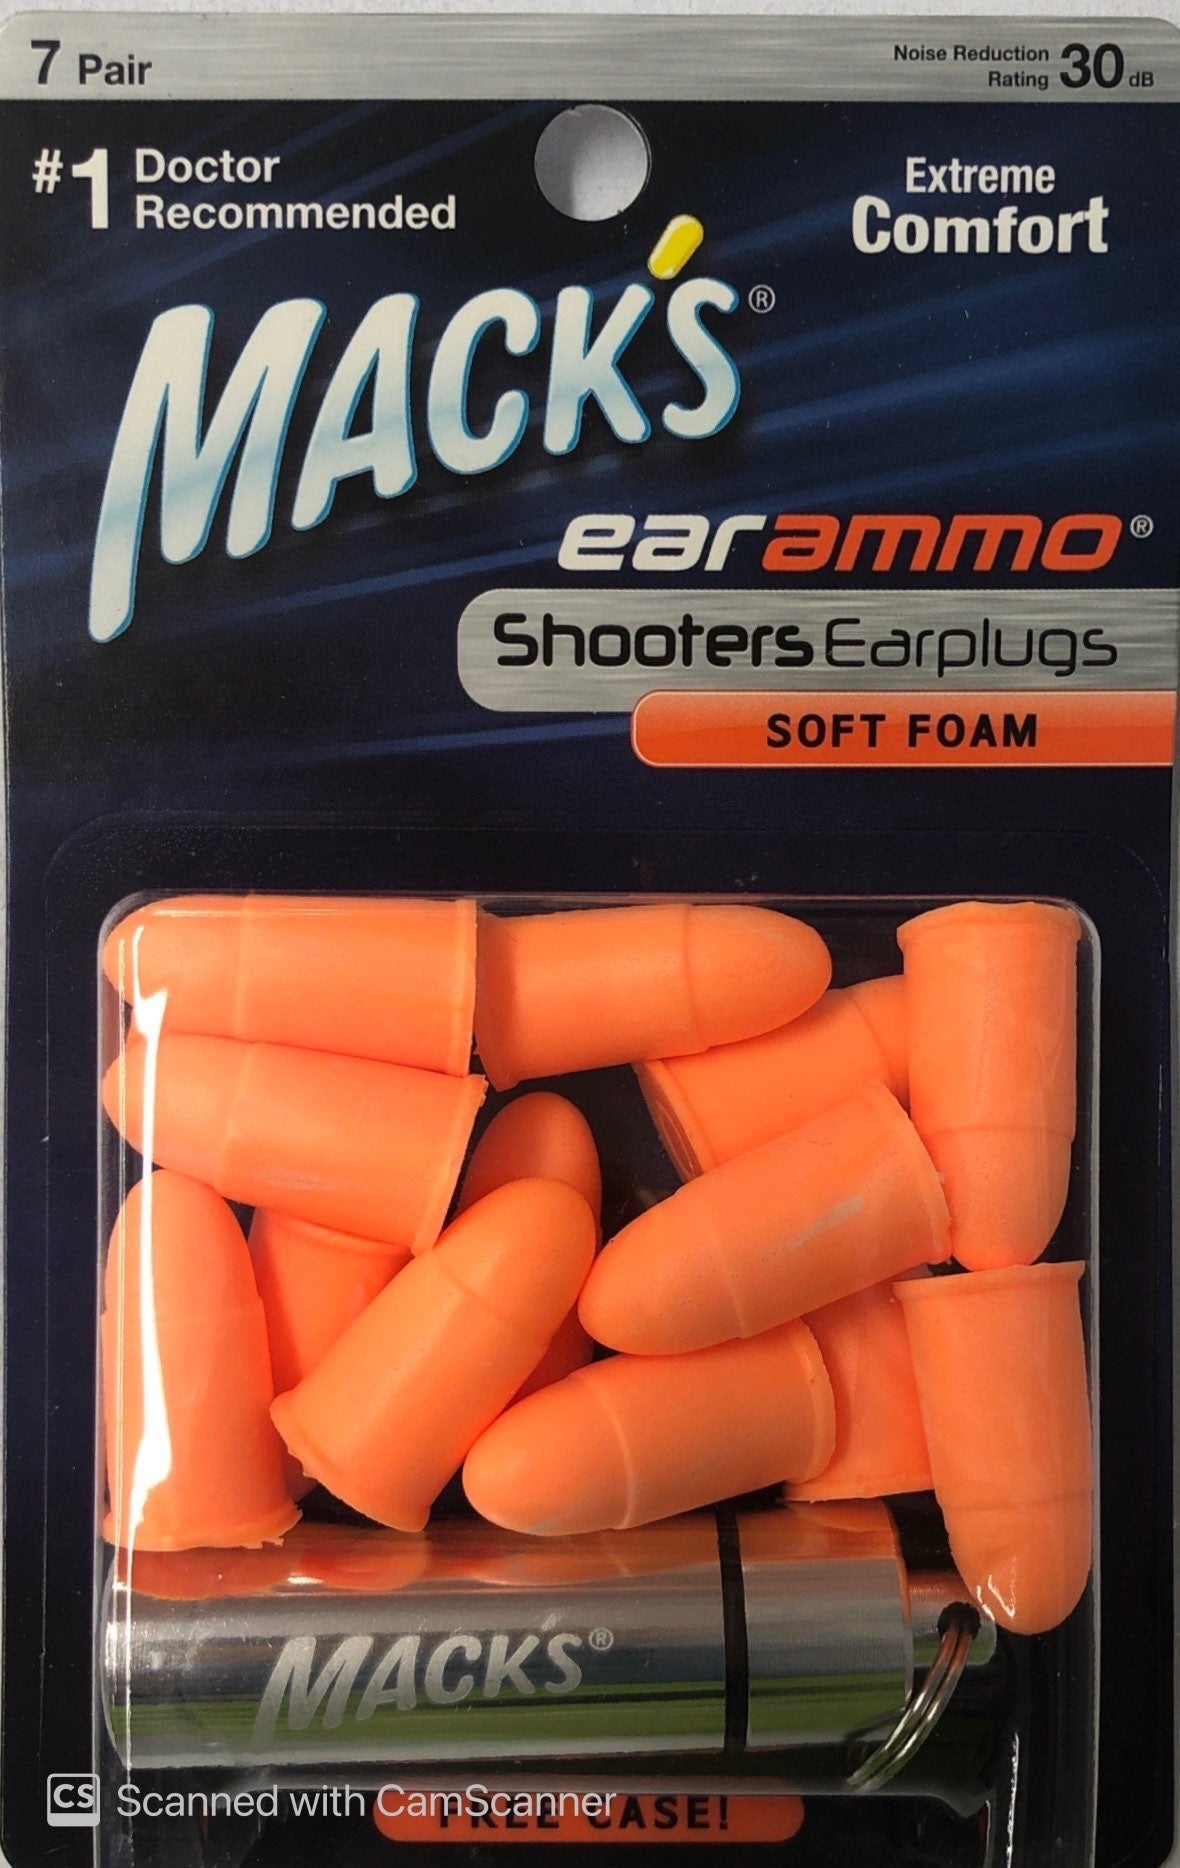 Macks Extreme Comfort Earammo Shooters Earplugs Soft Foam 7 Pair Free Case